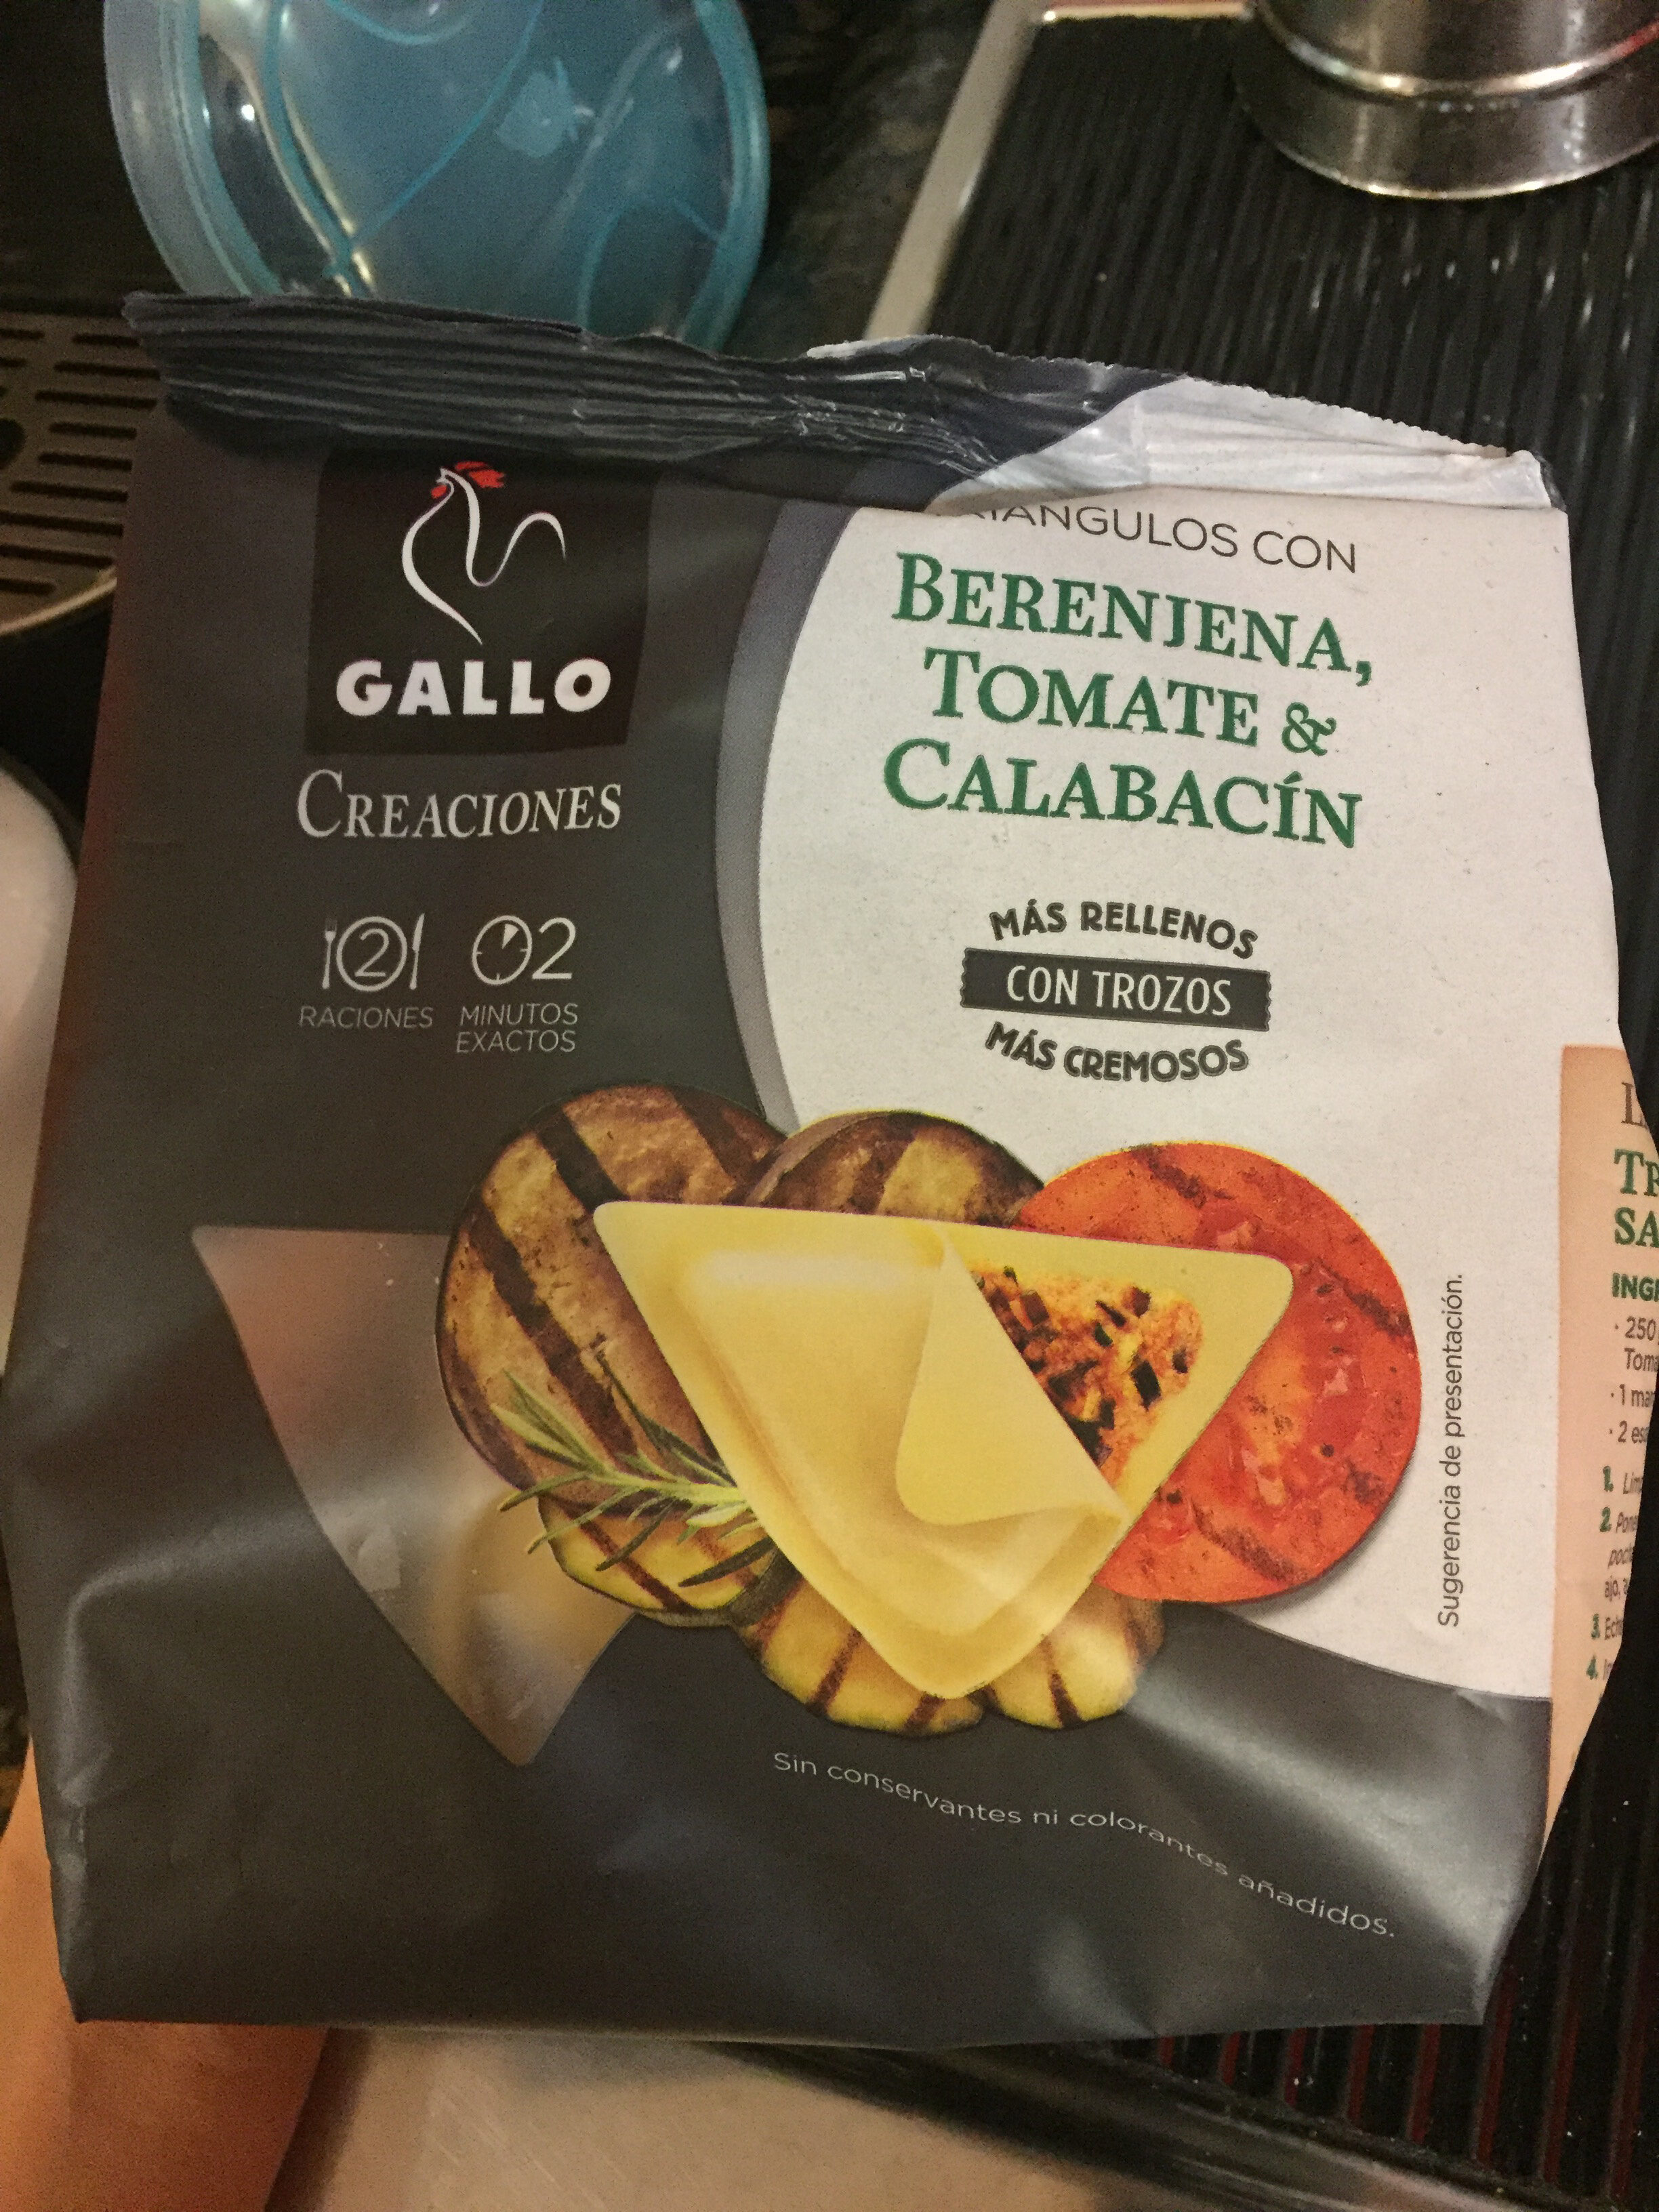 Triangulos con berenjena tomate & calabacin - Product